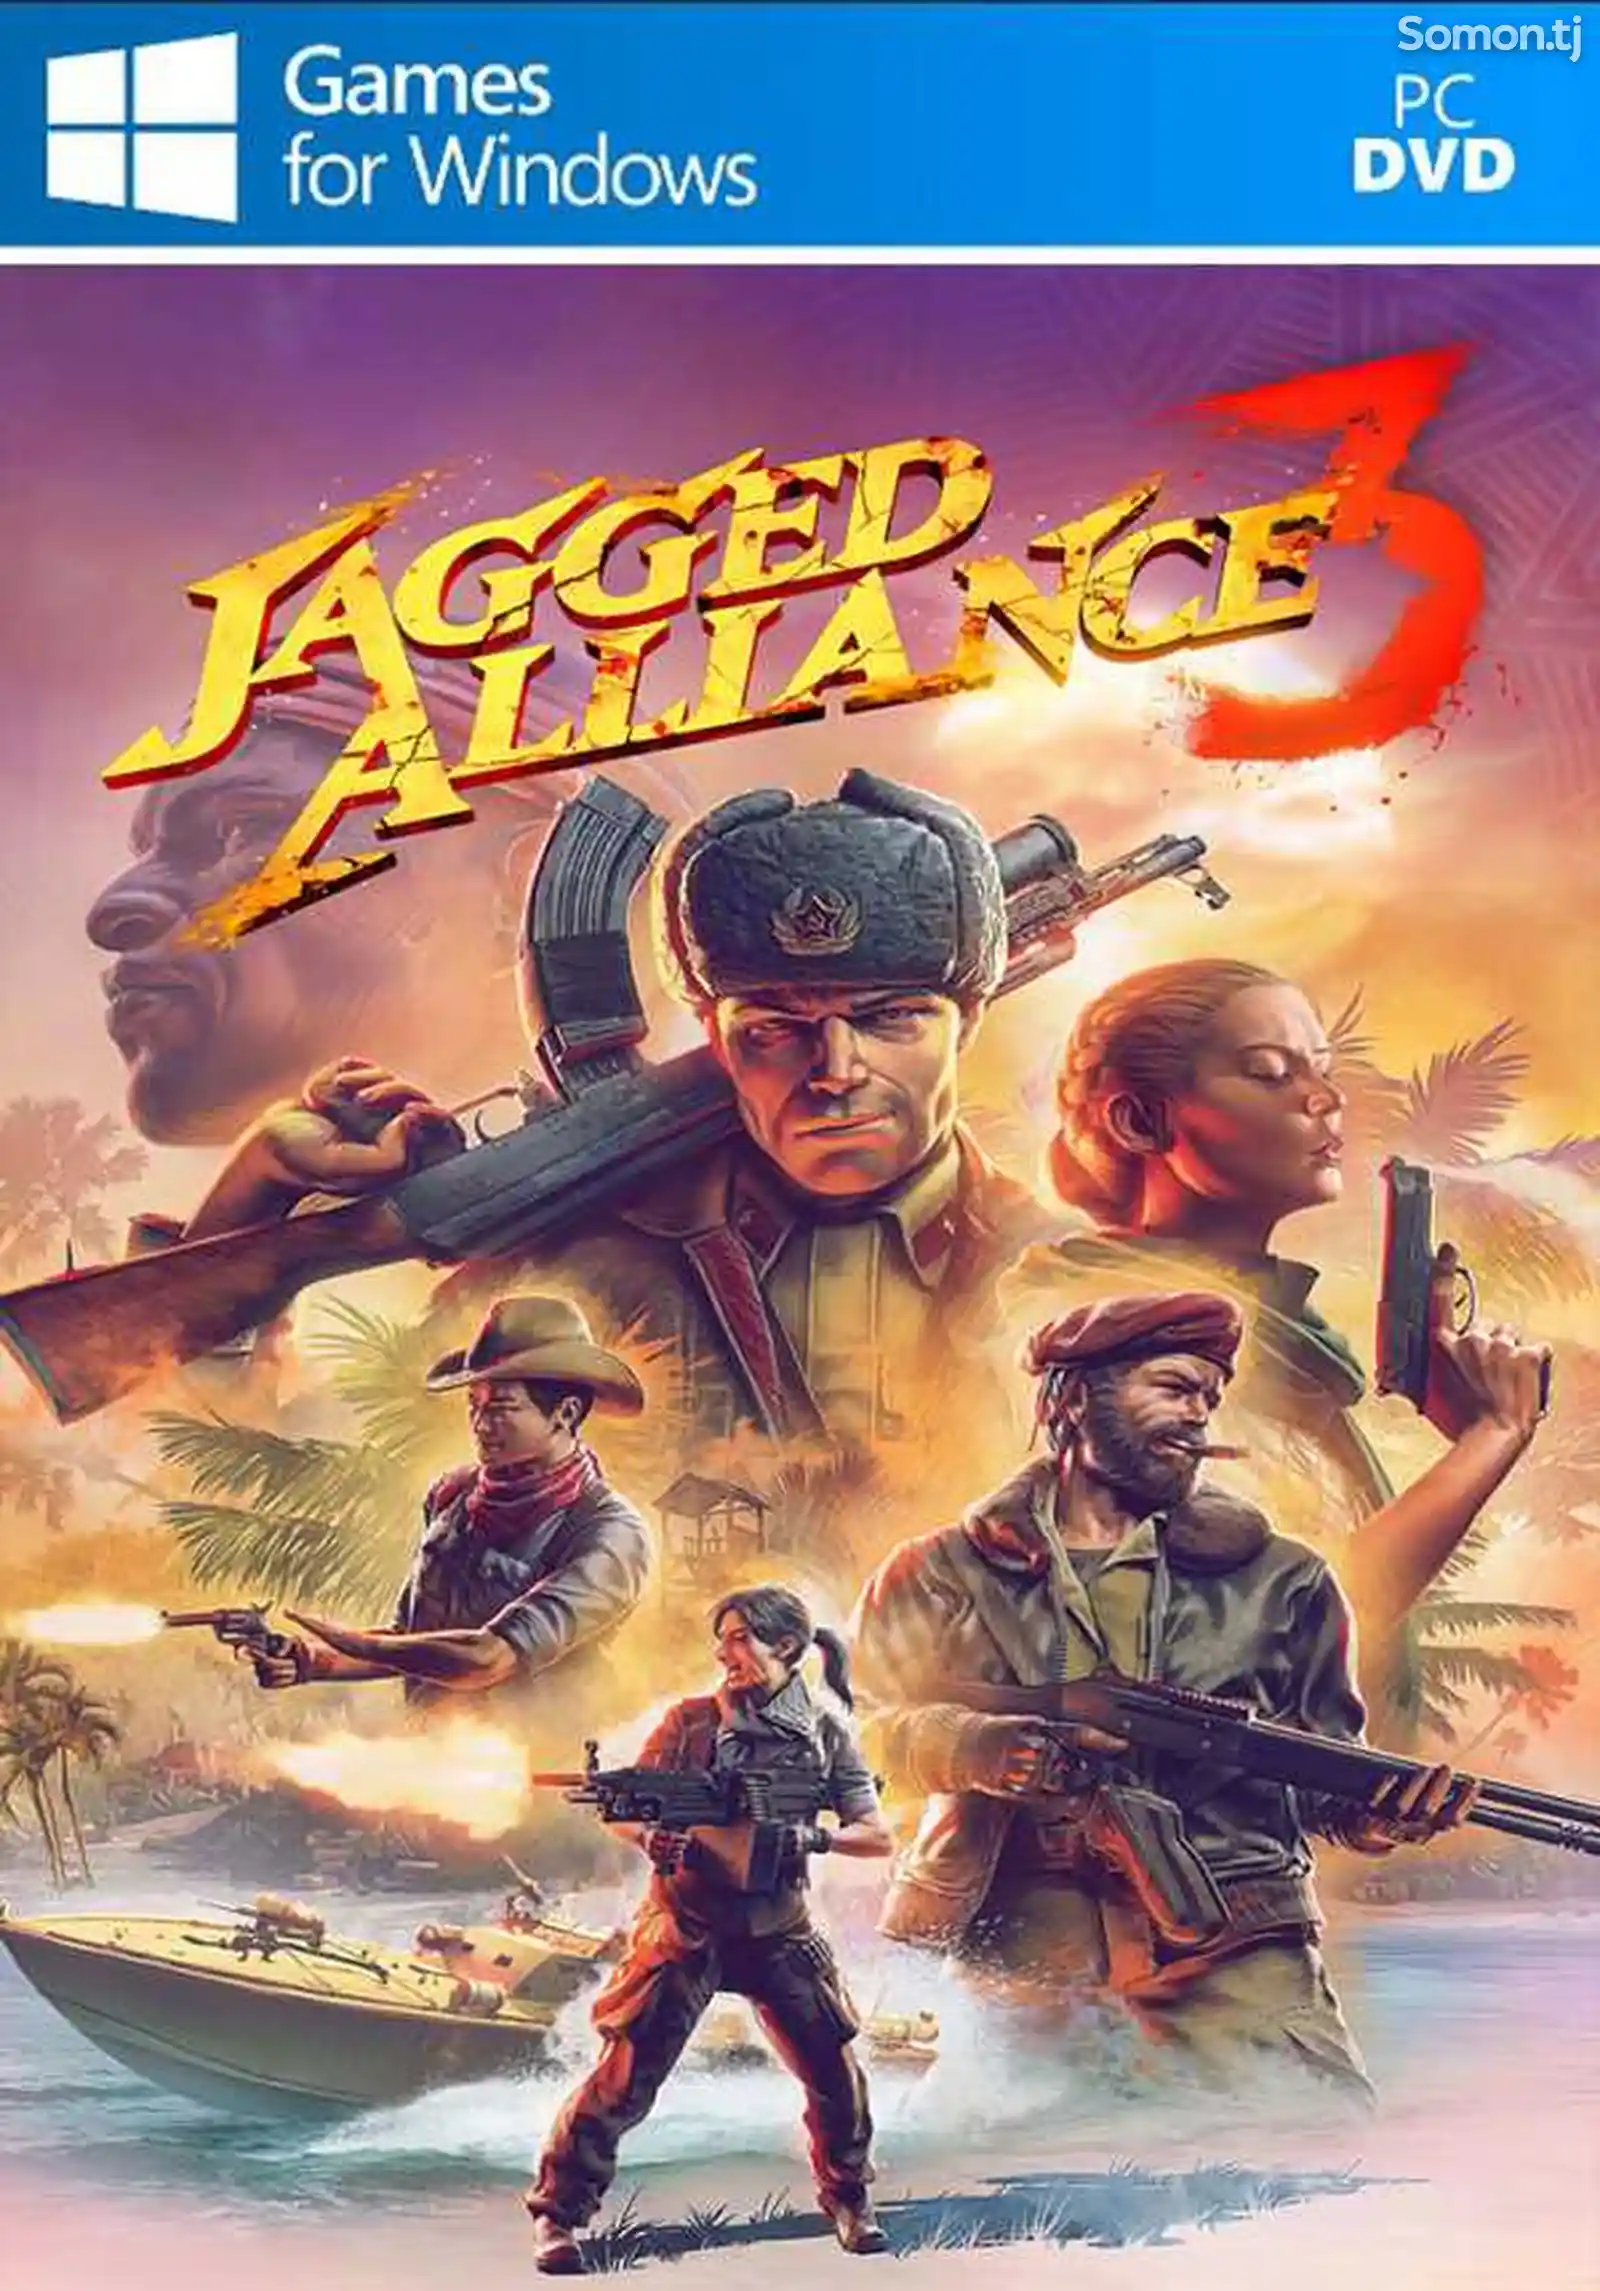 Игра Jagged alliance 3 для компьютера-пк-pc-1